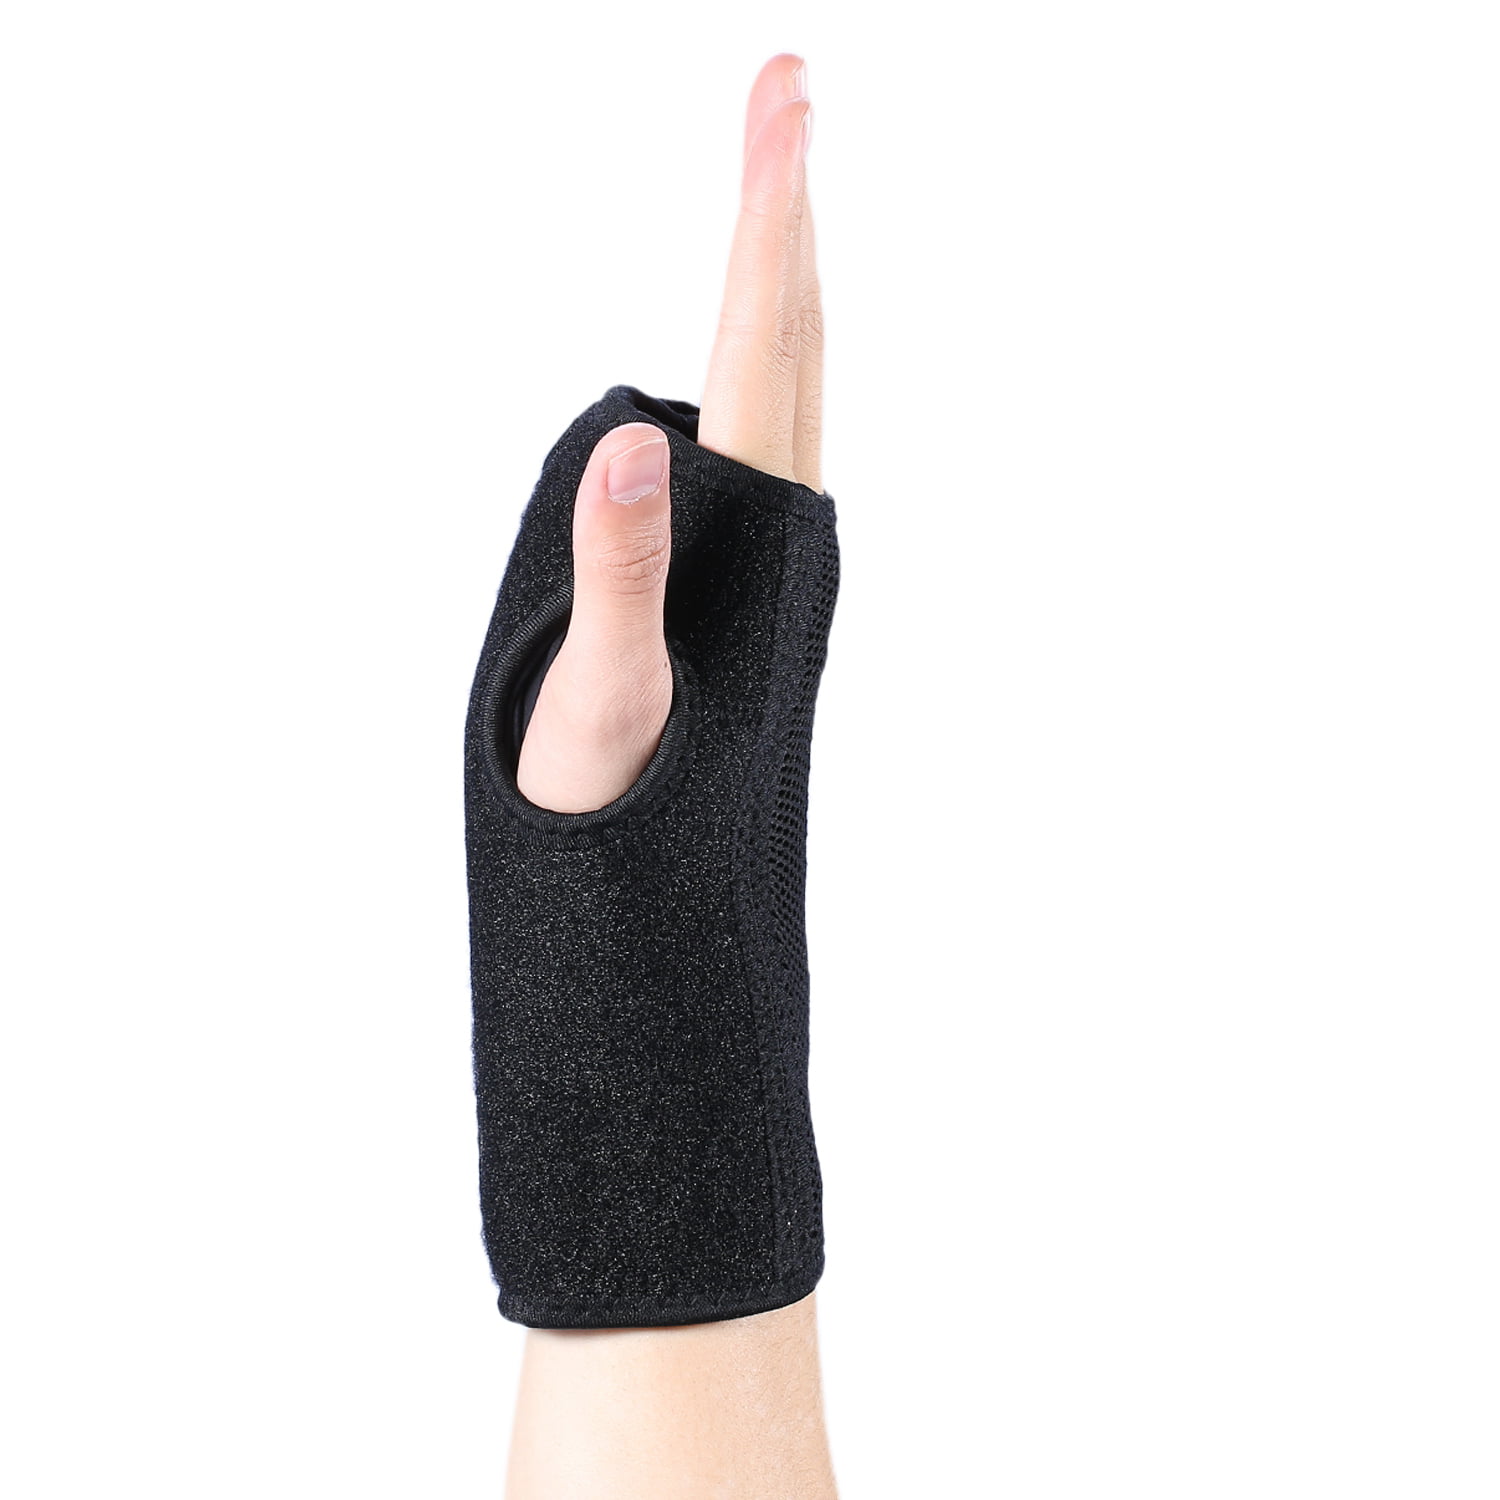 Typing Pain Relief & Sport Wrist Injuries Arthritis Left Hand Wrist Splint Fits Men & Women Ganglion Cyst Tendonitis Arrow Splints Wrist Brace for Carpal Tunnel Syndrome Wrist Sleeve Support